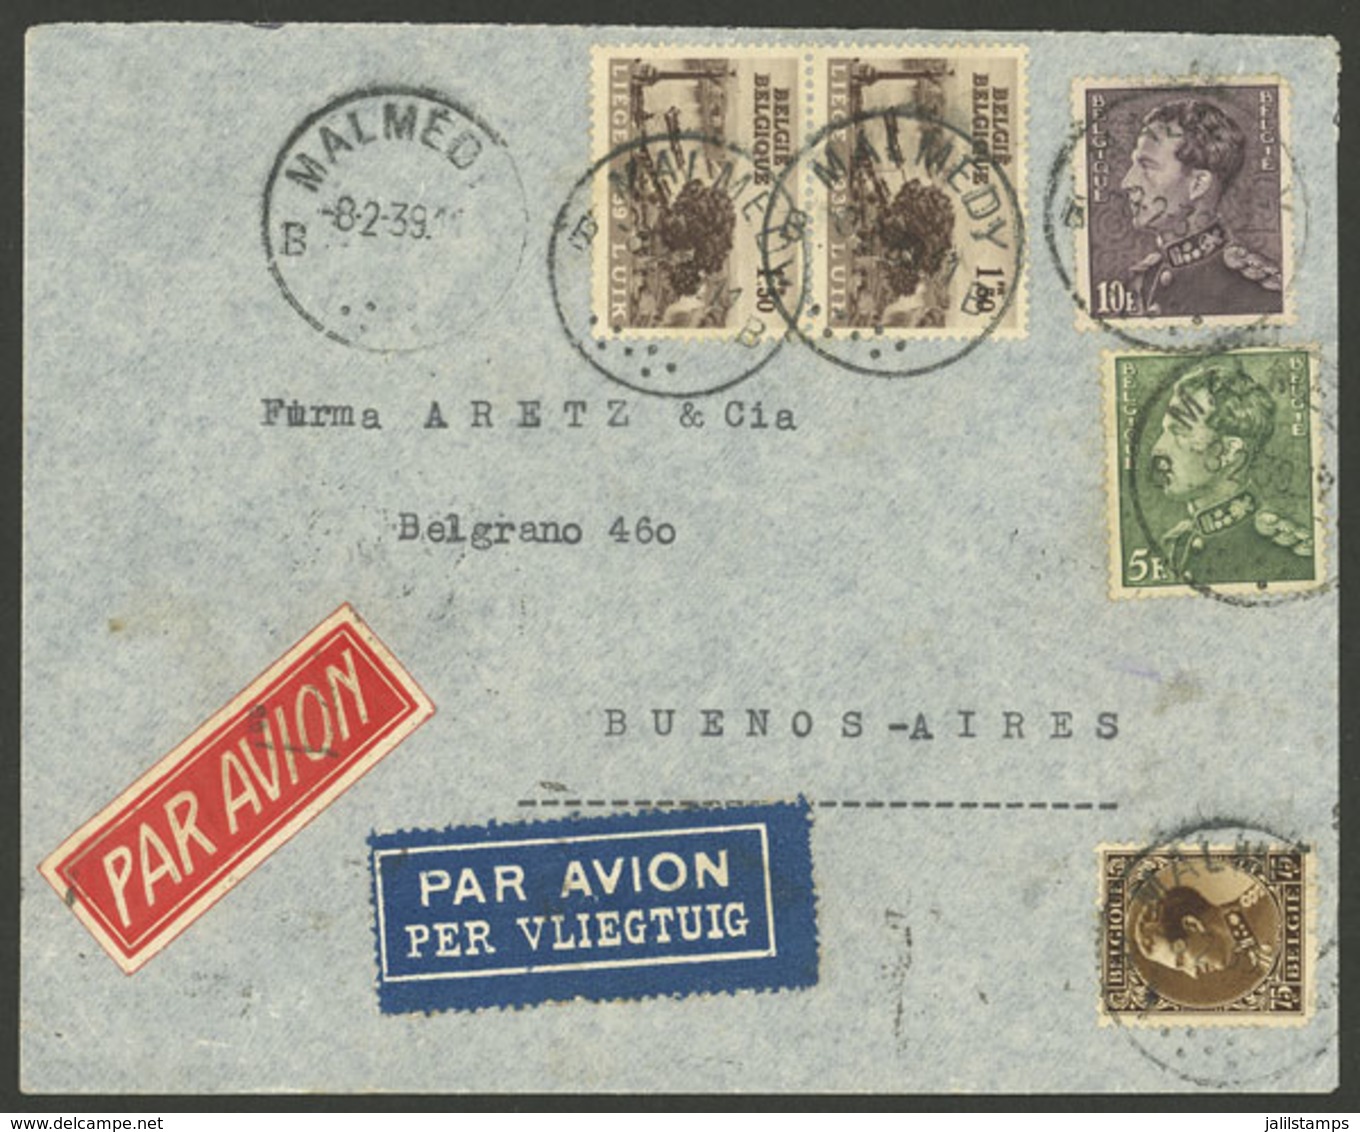 BELGIUM: 8/FE/1939 Malmedy - Argentina, Airmail Cover Franked With 18.75Fr., Arrival Backstamp Of 12/FE, VF! - Briefe U. Dokumente